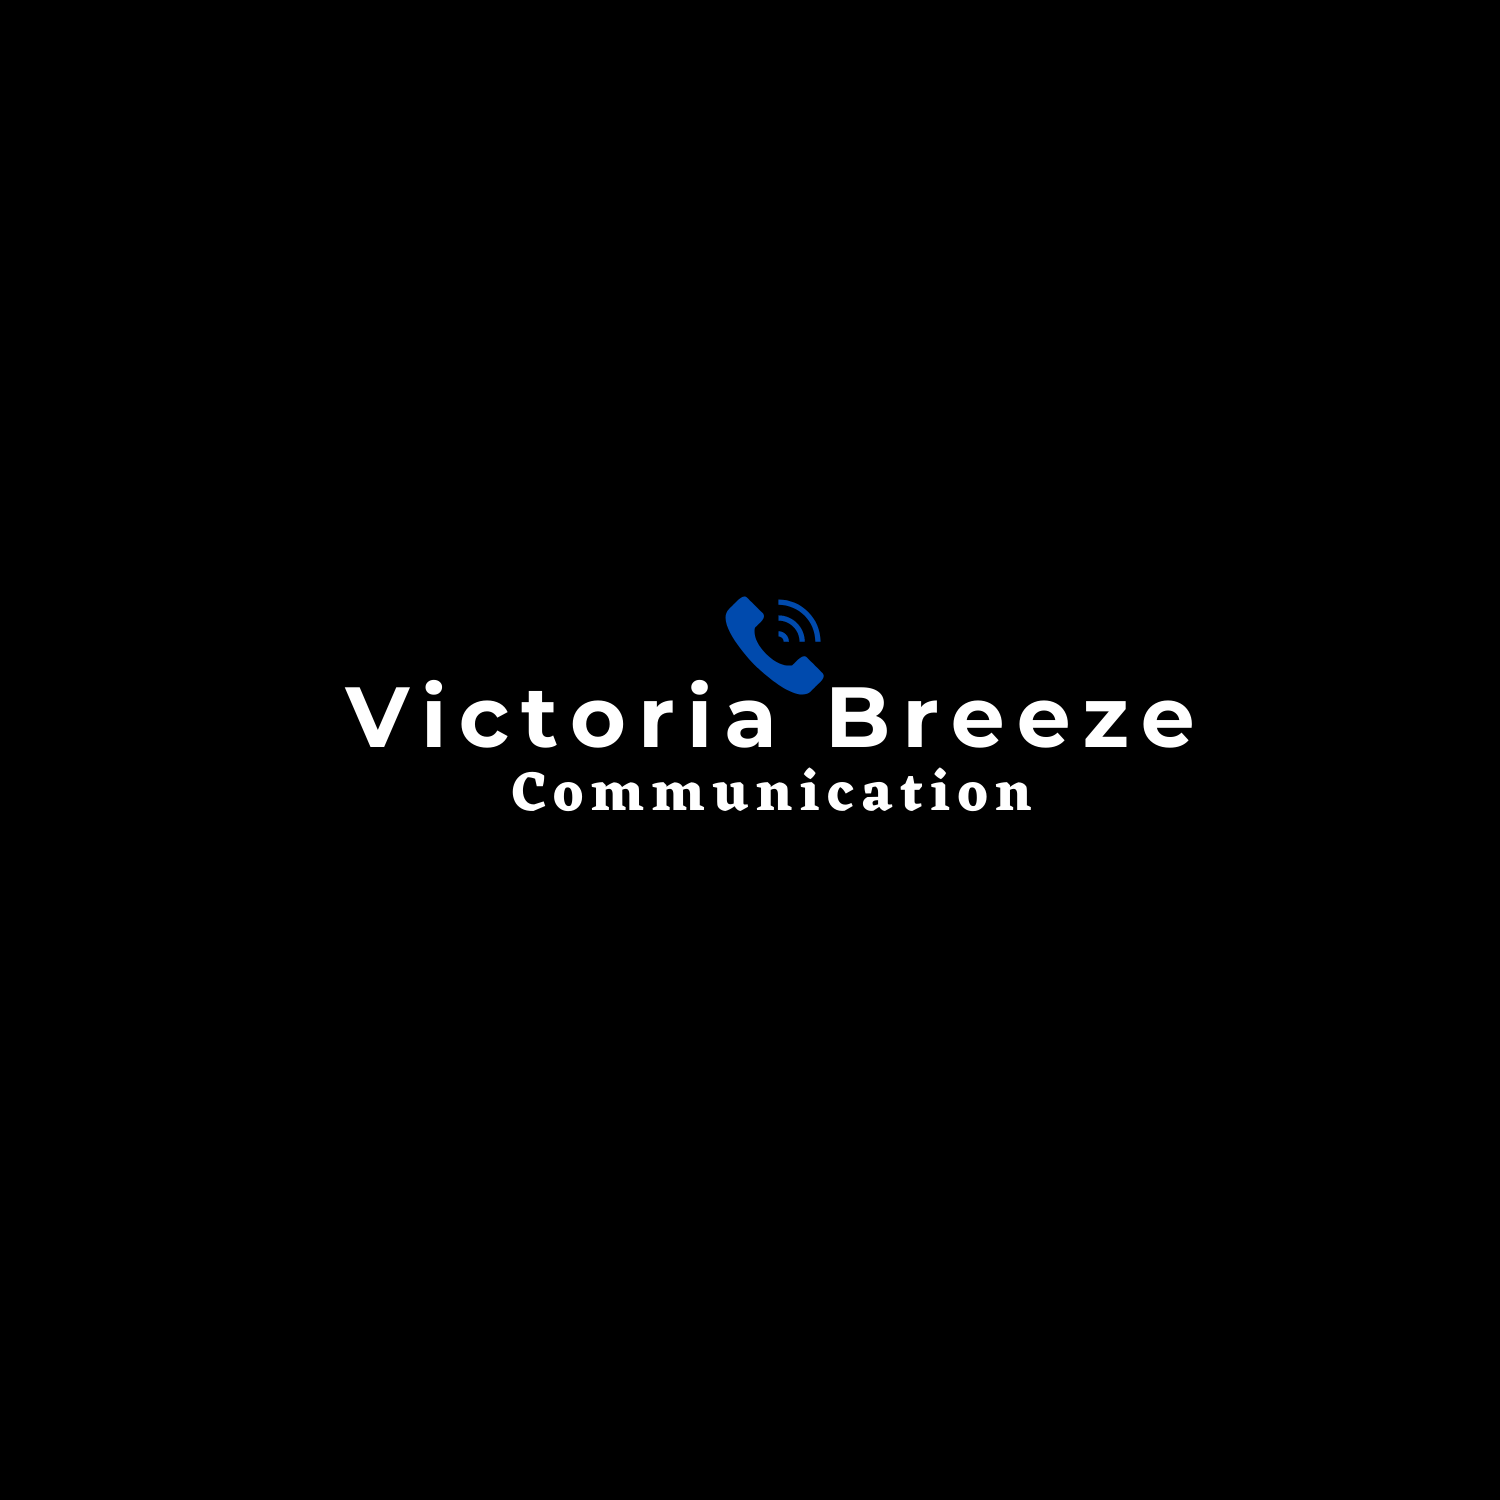 Victoria Breeze Communication